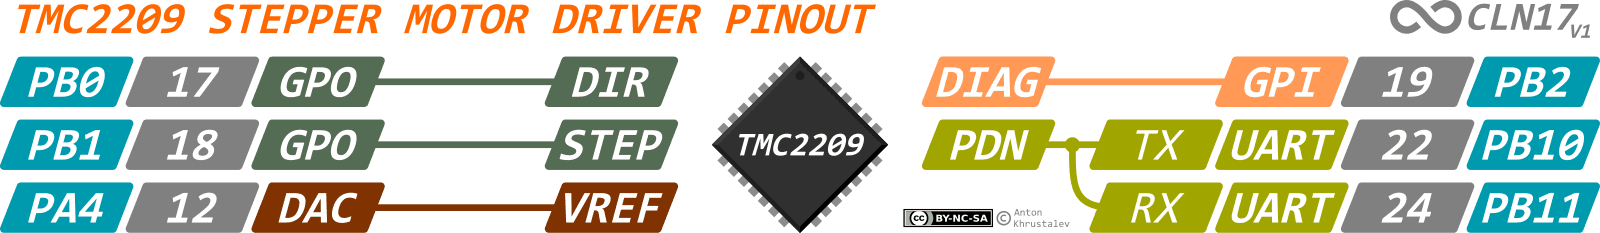 TMC2209 Motor Driver Pinout